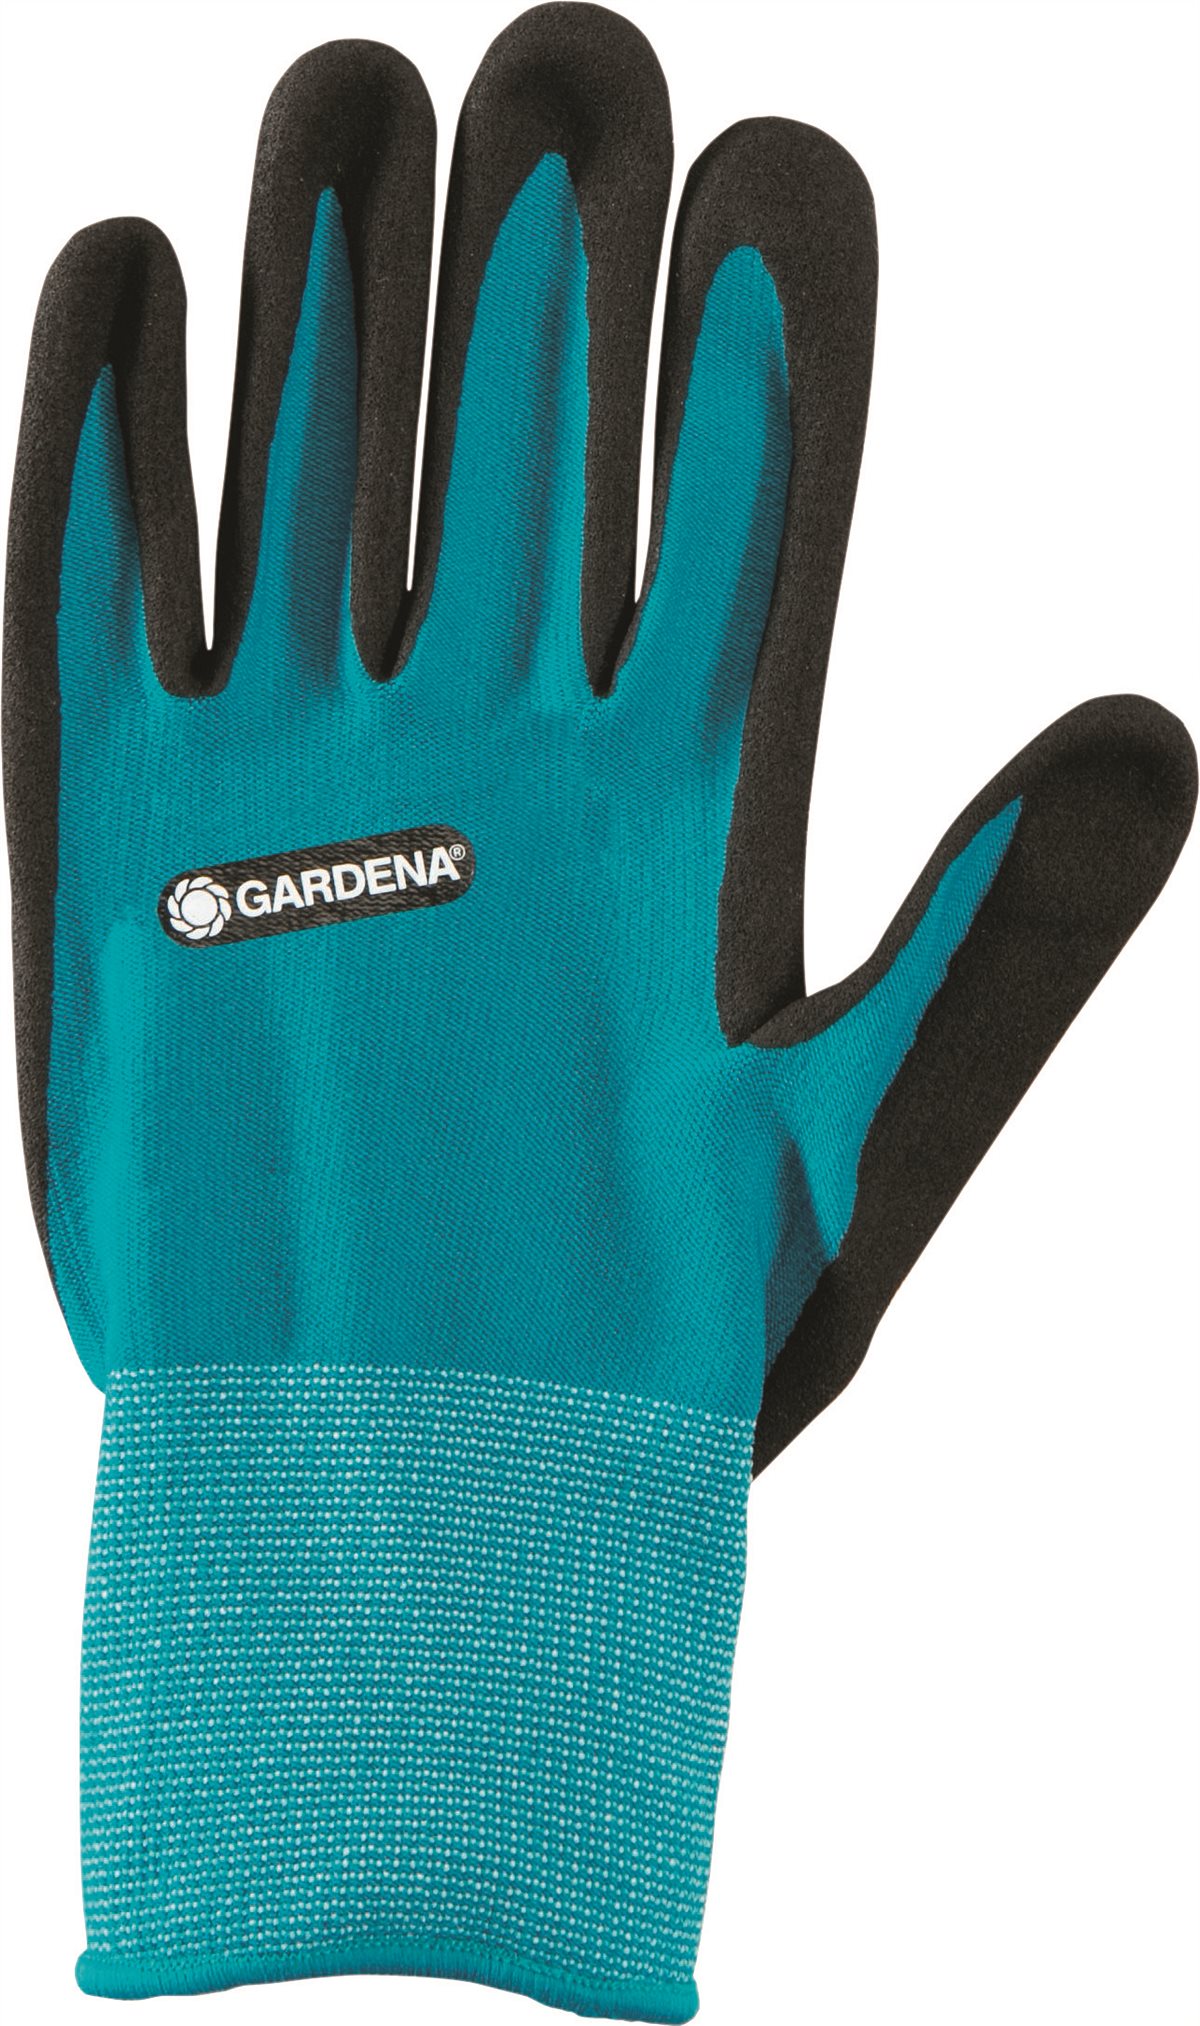 Grubbies Garden Gloves One Size Nylon Nitrile Teal 